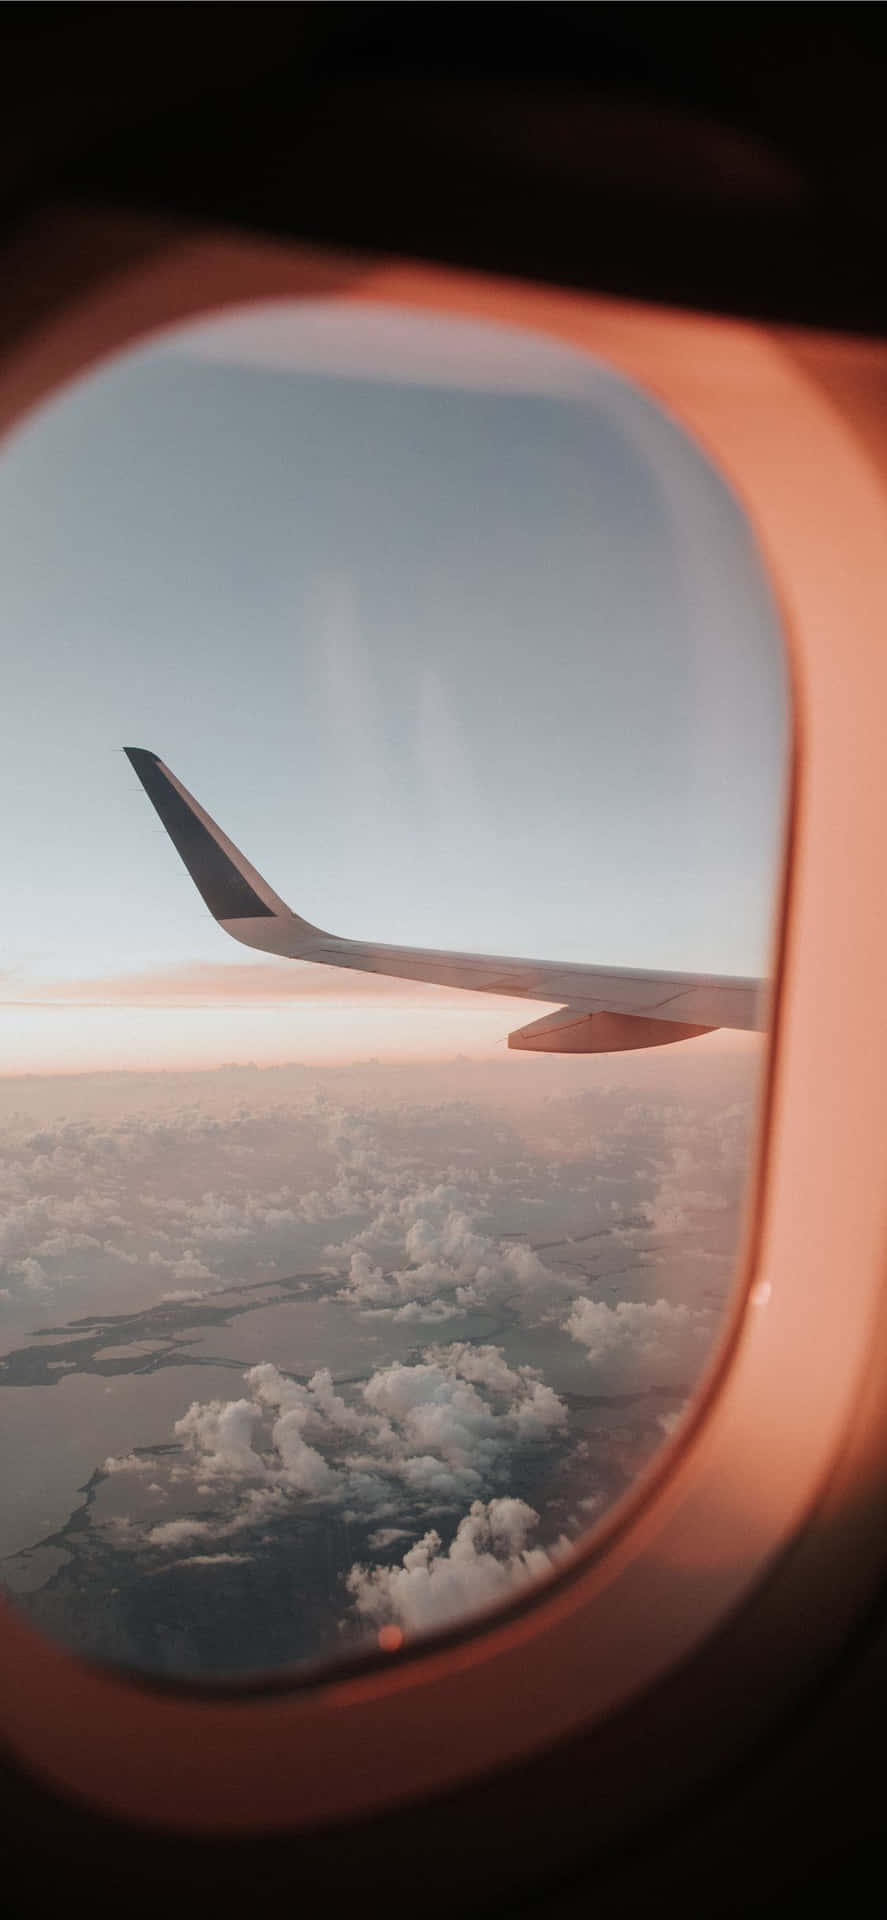 An Airplane Wing Seen Through An Airplane Window Wallpaper